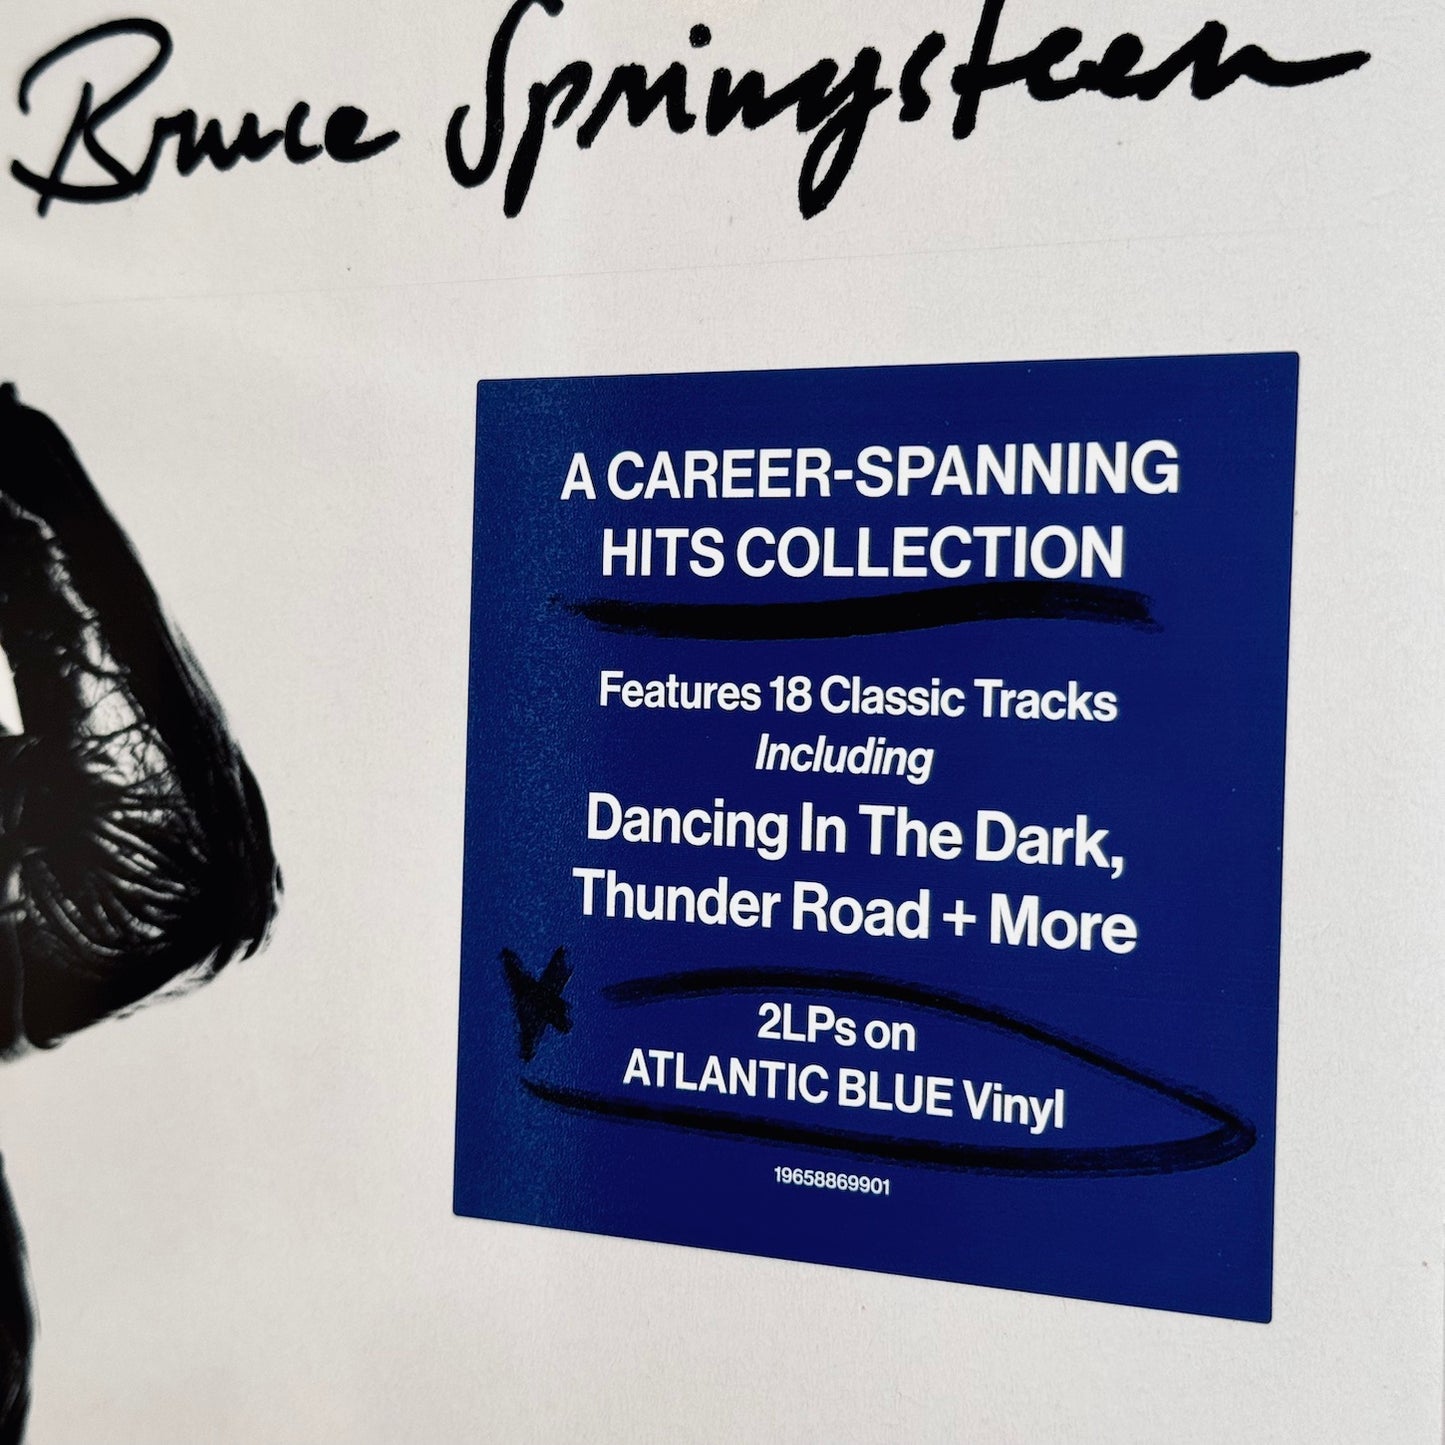 Bruce Springsteen - Best of Bruce Springsteen. 2LP [Ltd. Ed. Atlantic Blue Vinyl]